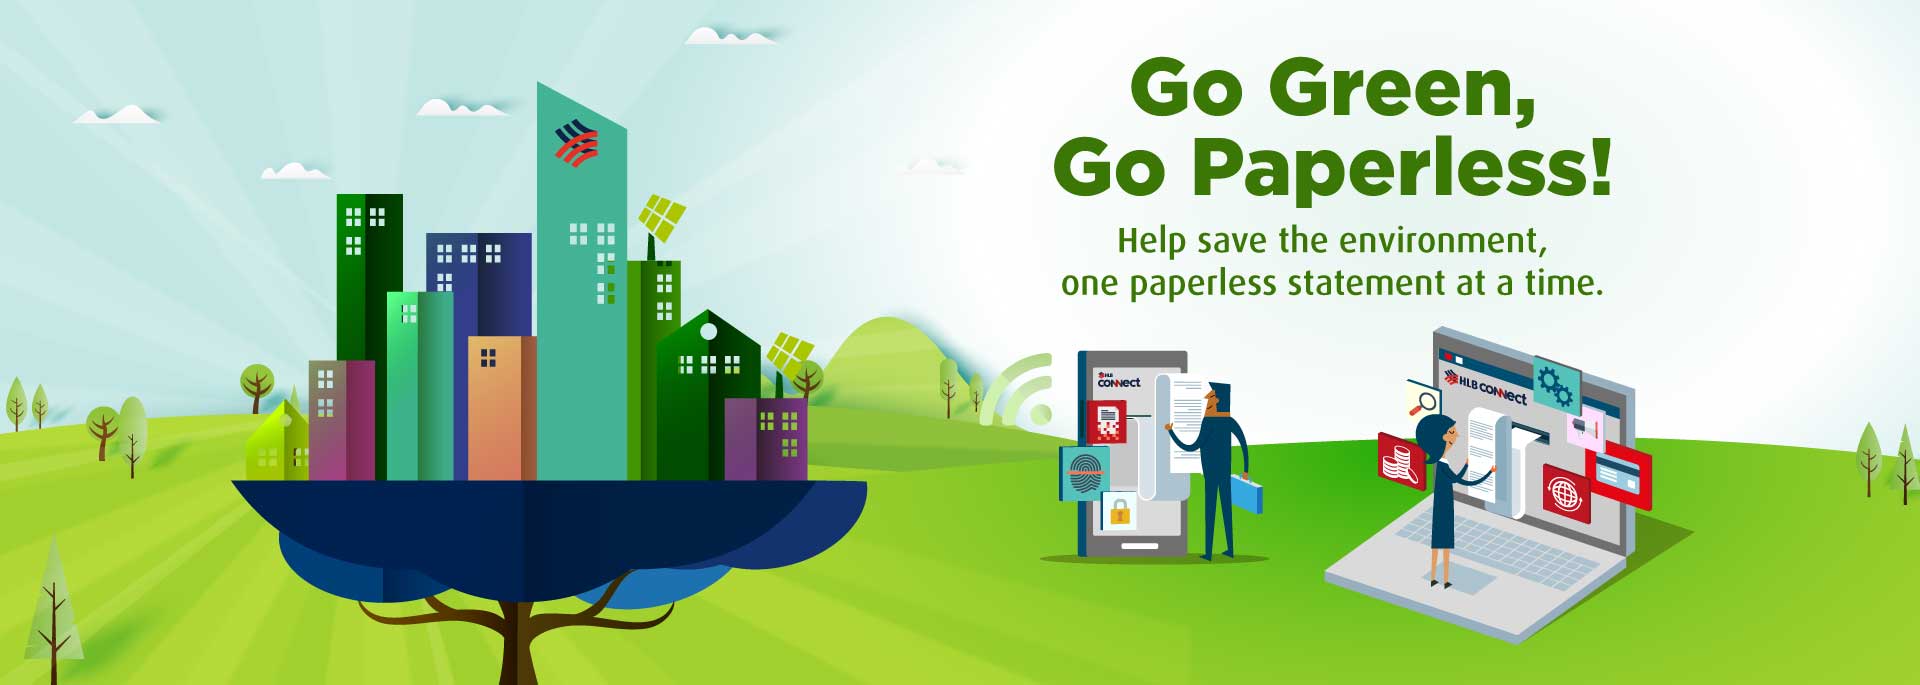 Let's go green & go paperless!